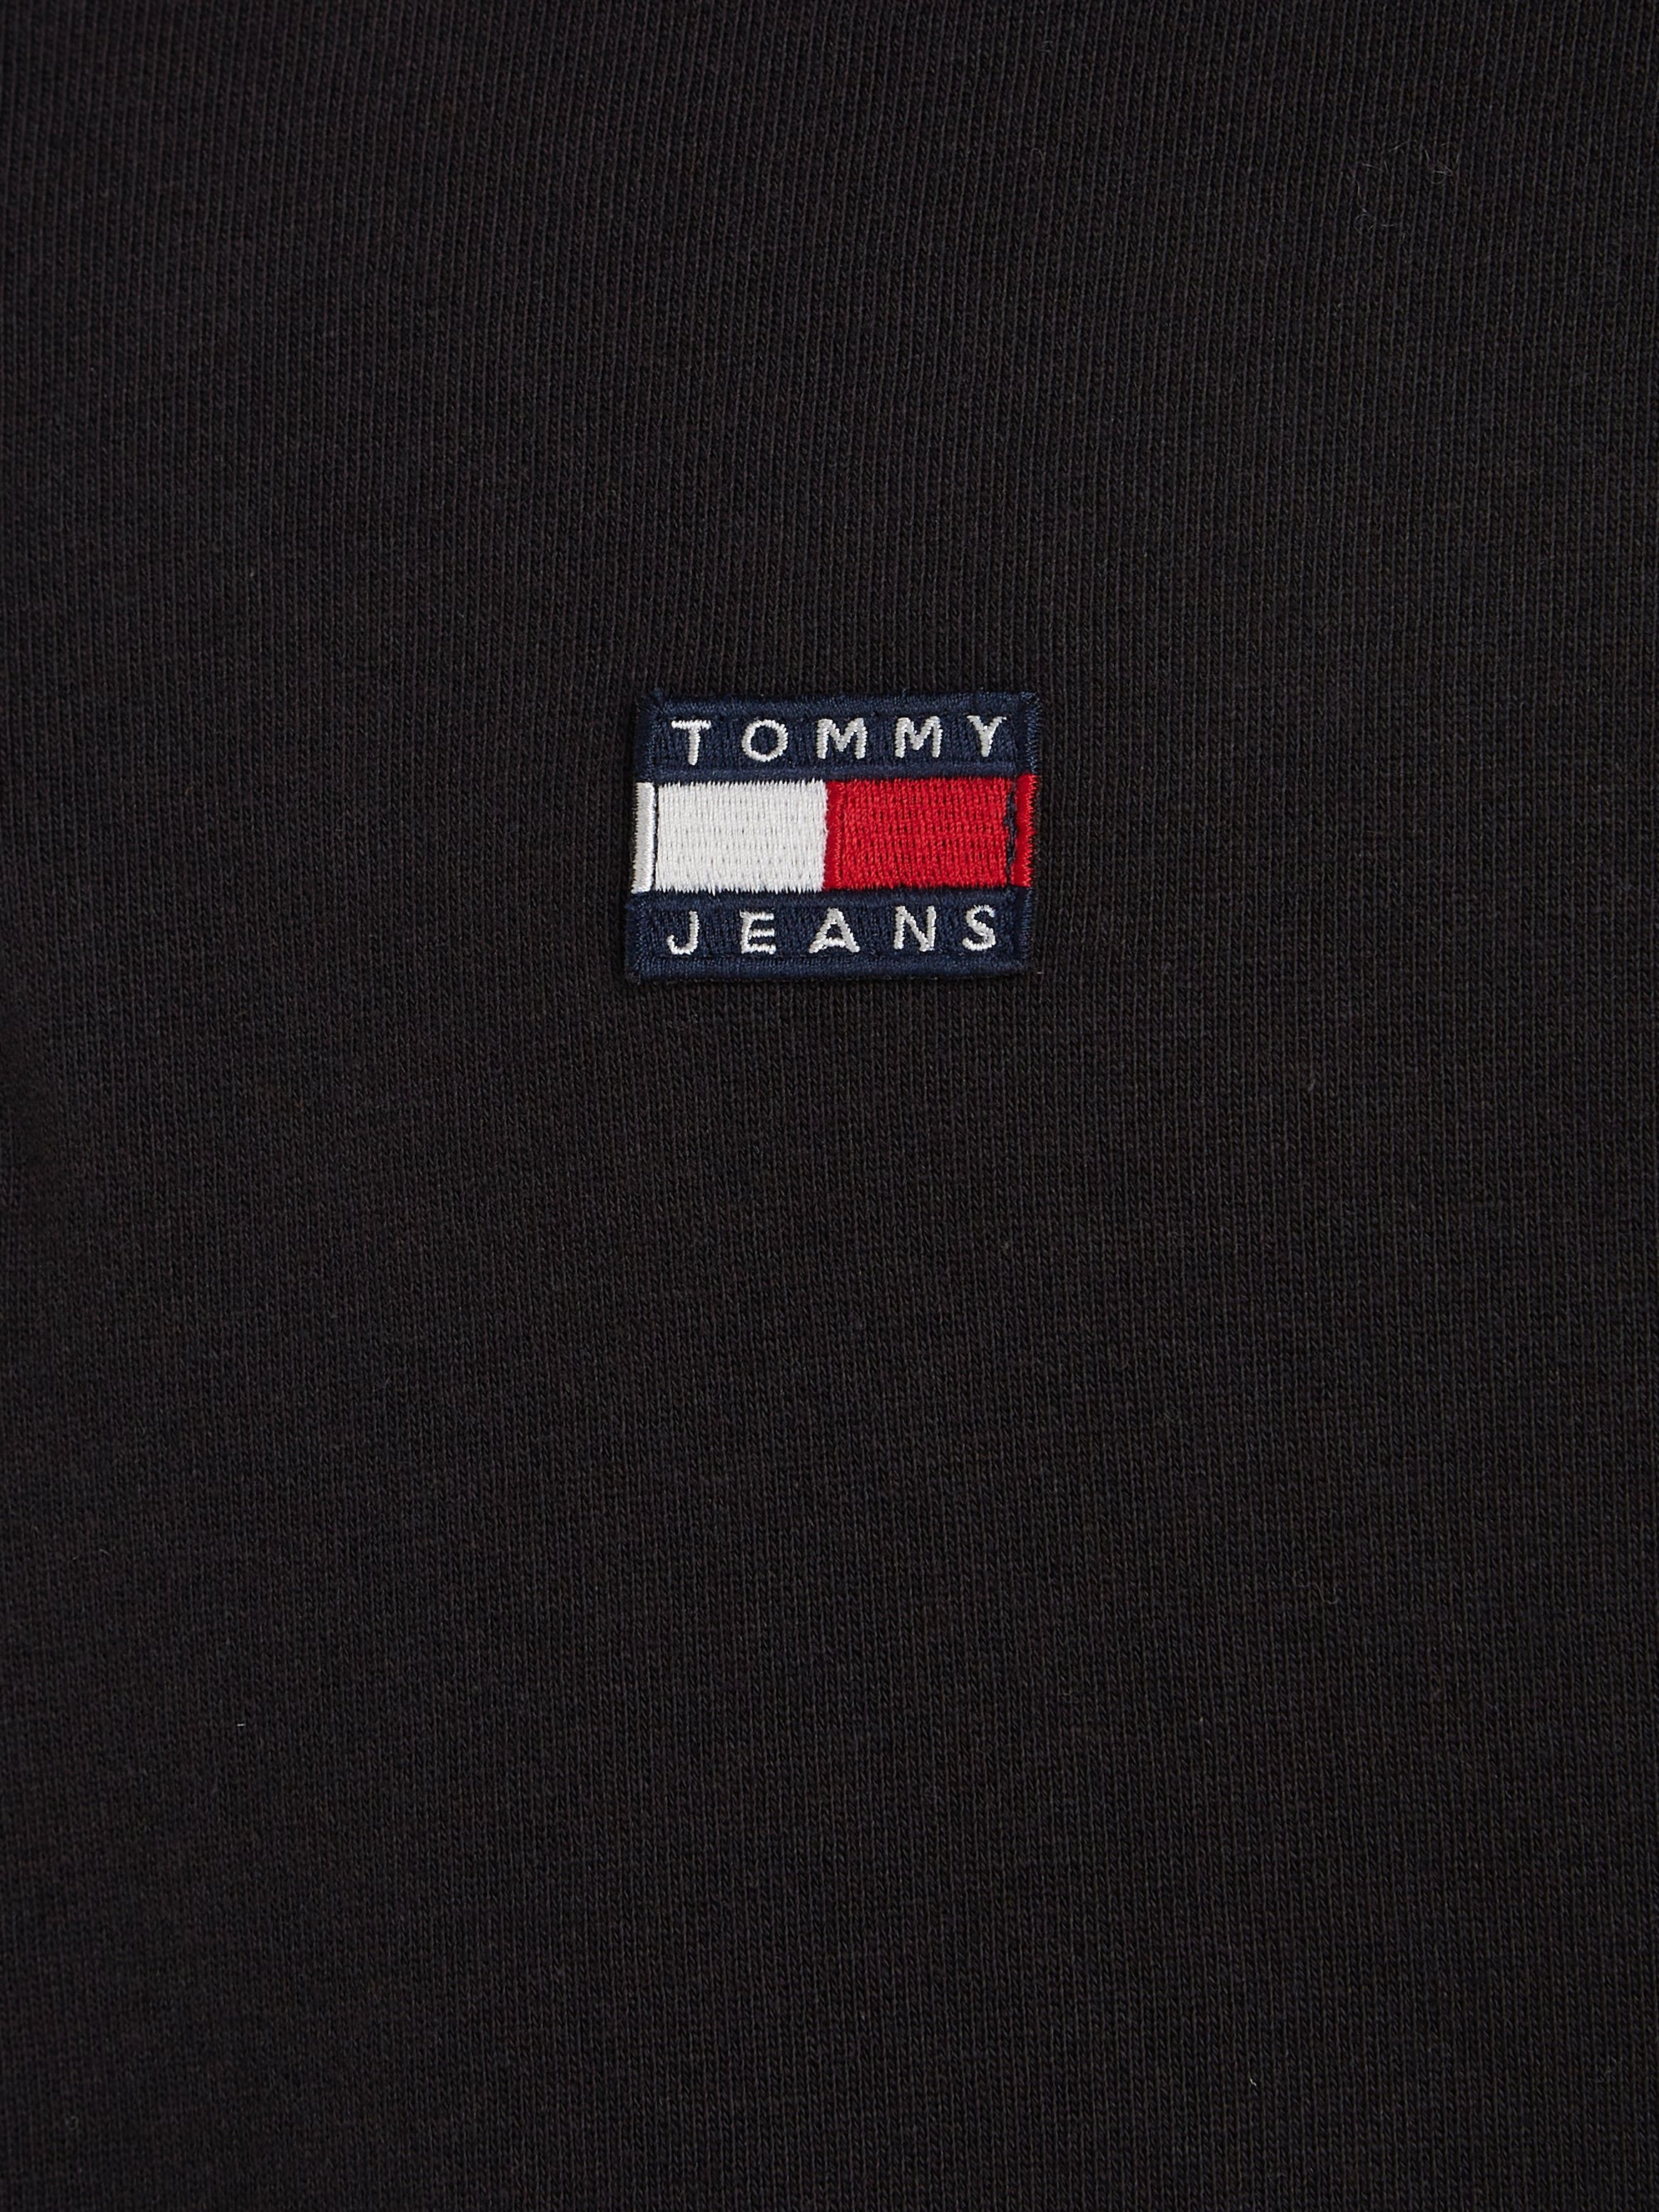 TJM RUGBY Langarm-Poloshirt BADGE Black Jeans Tommy